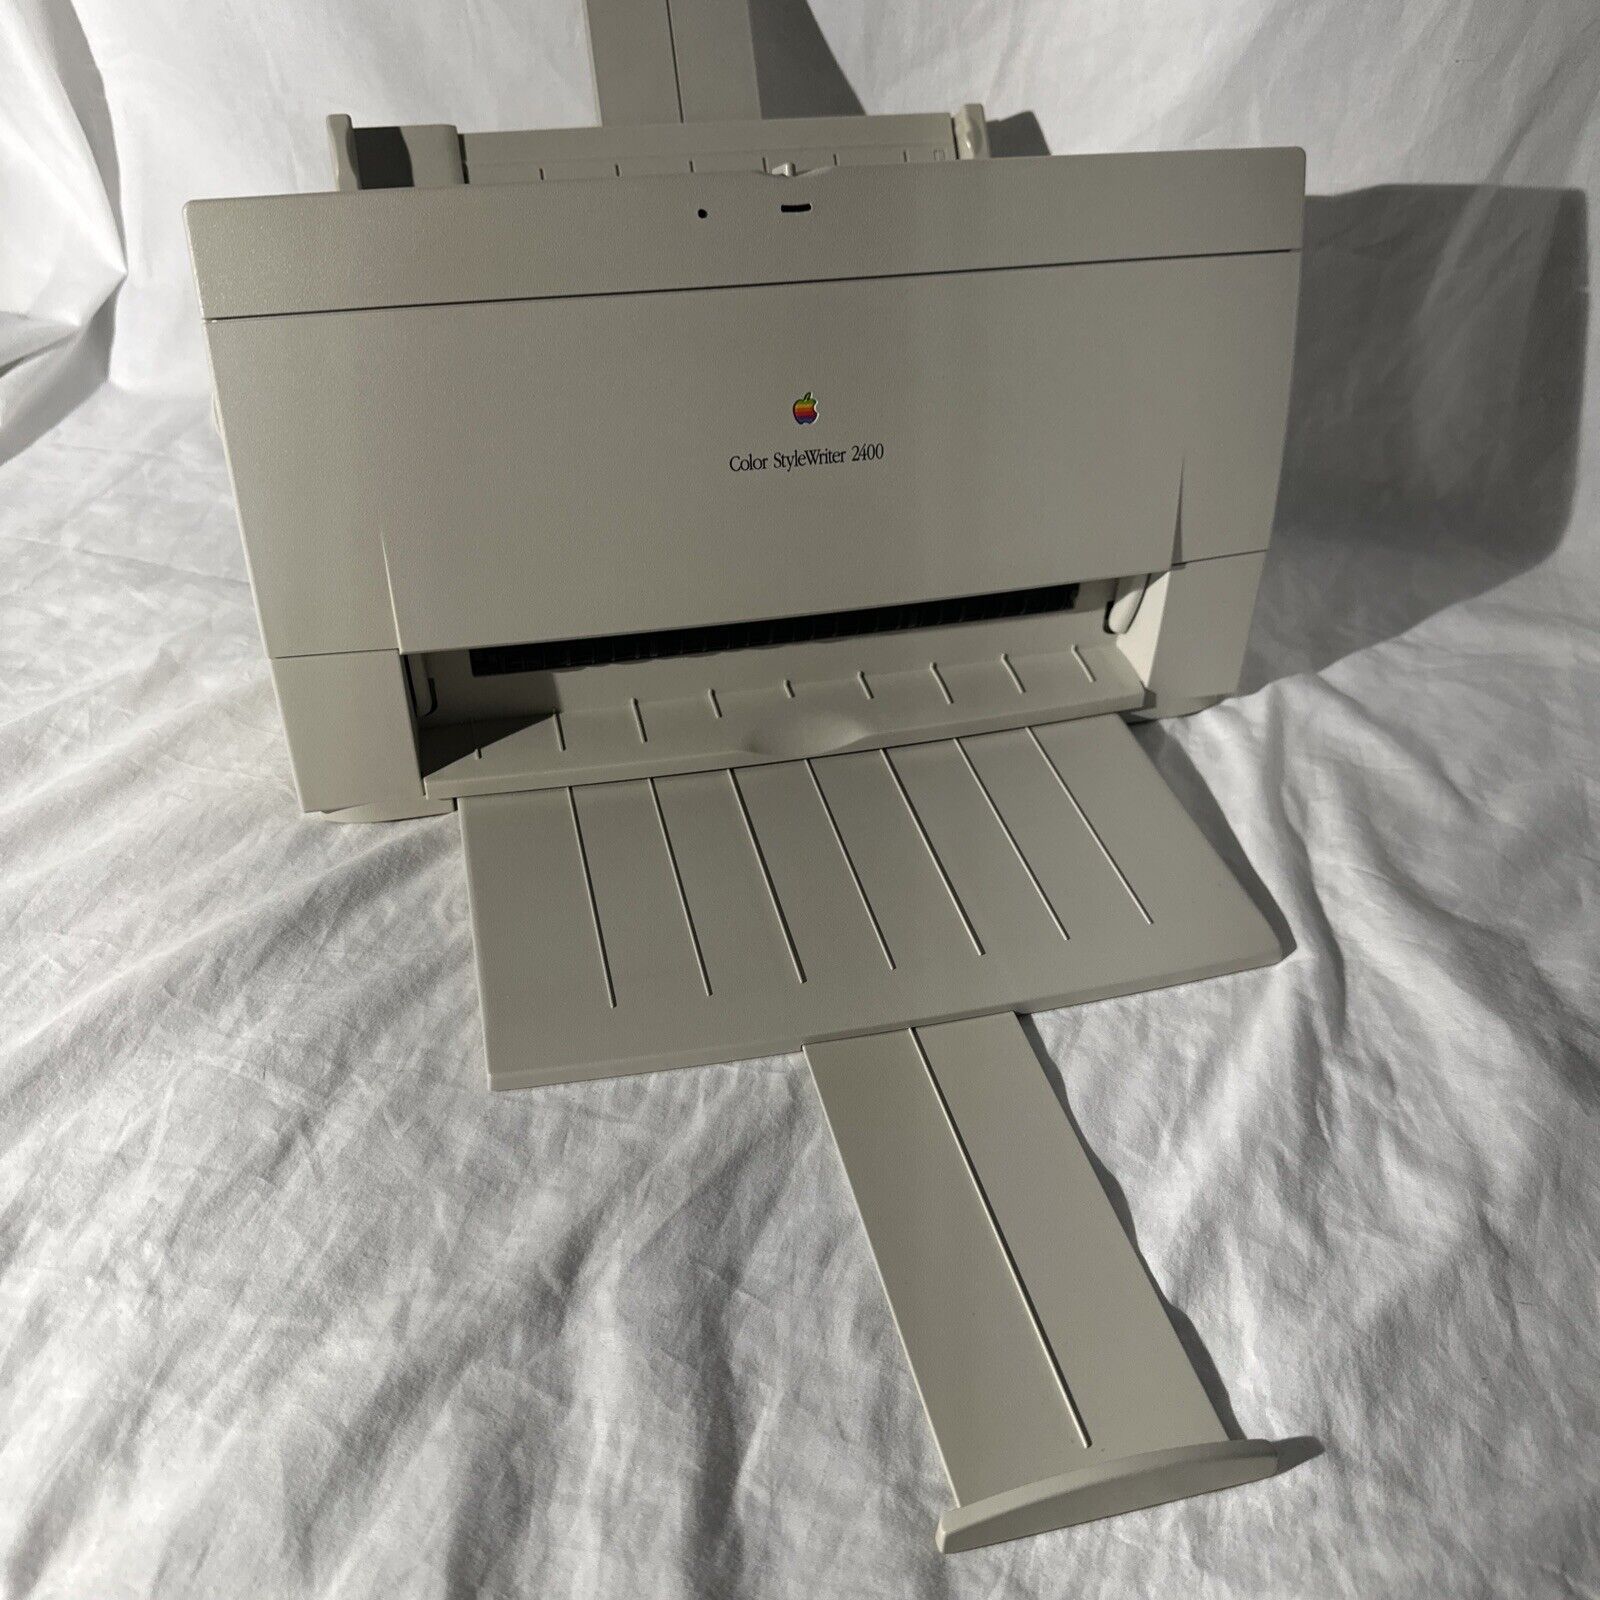 Apple Color StyleWriter 2400 Inkjet Printer + Original Box & Power Cord UNTESTED